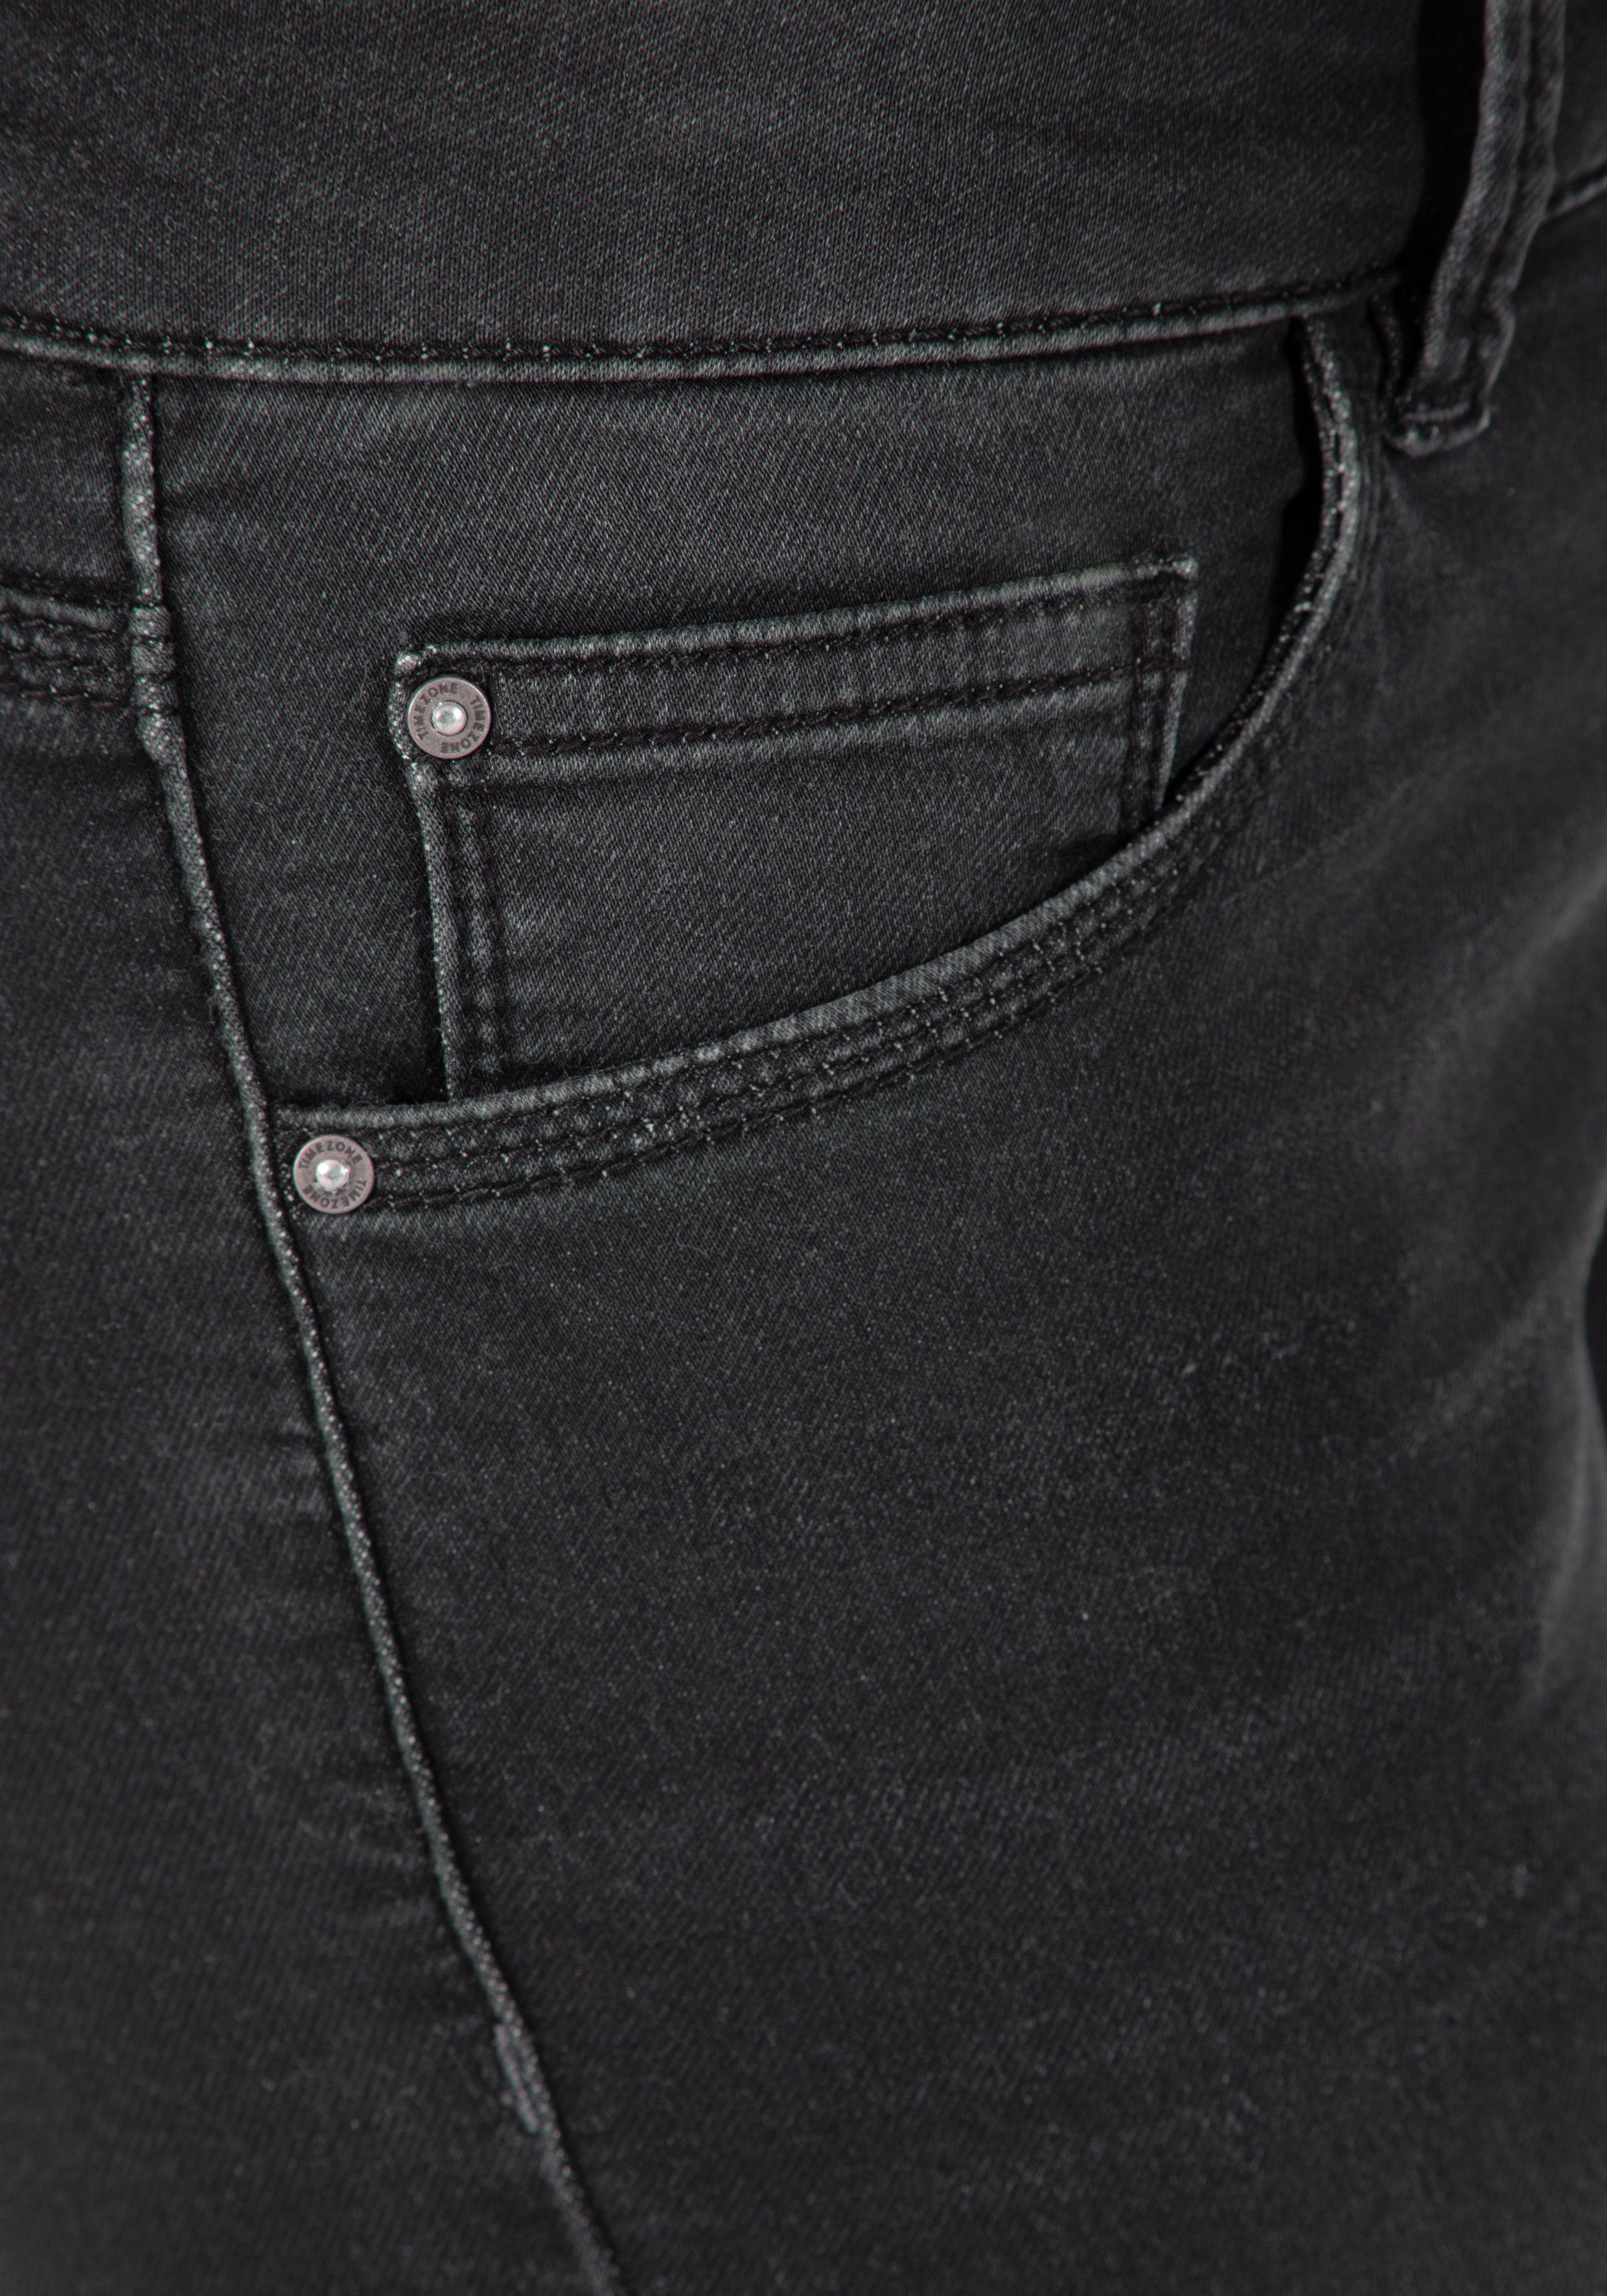 TIMEZONE AleenaTZ Jogg 5-Pocket-Jeans schwarz Tight